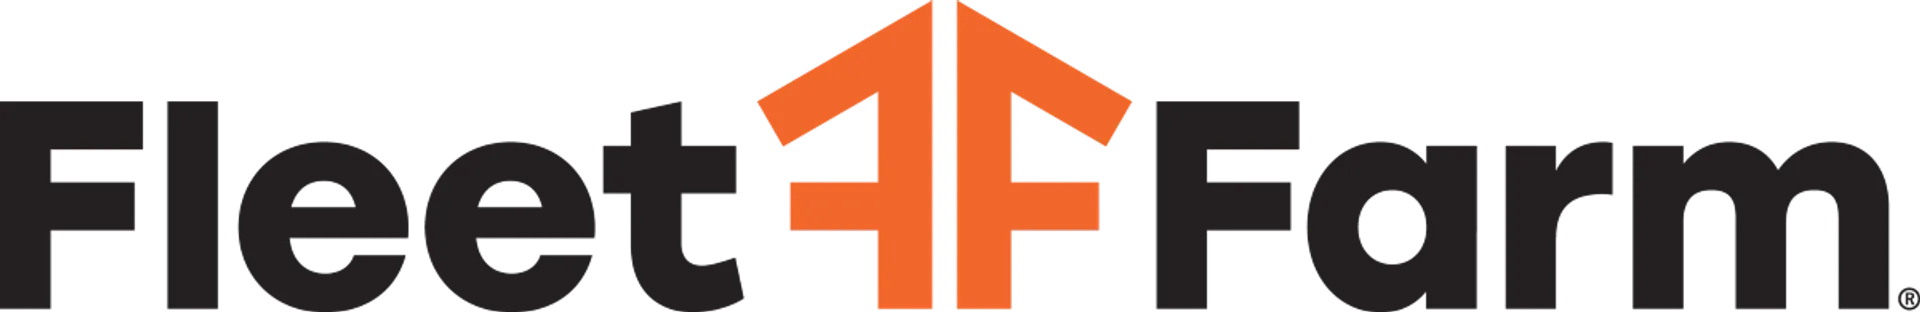 FLEET FARM logo